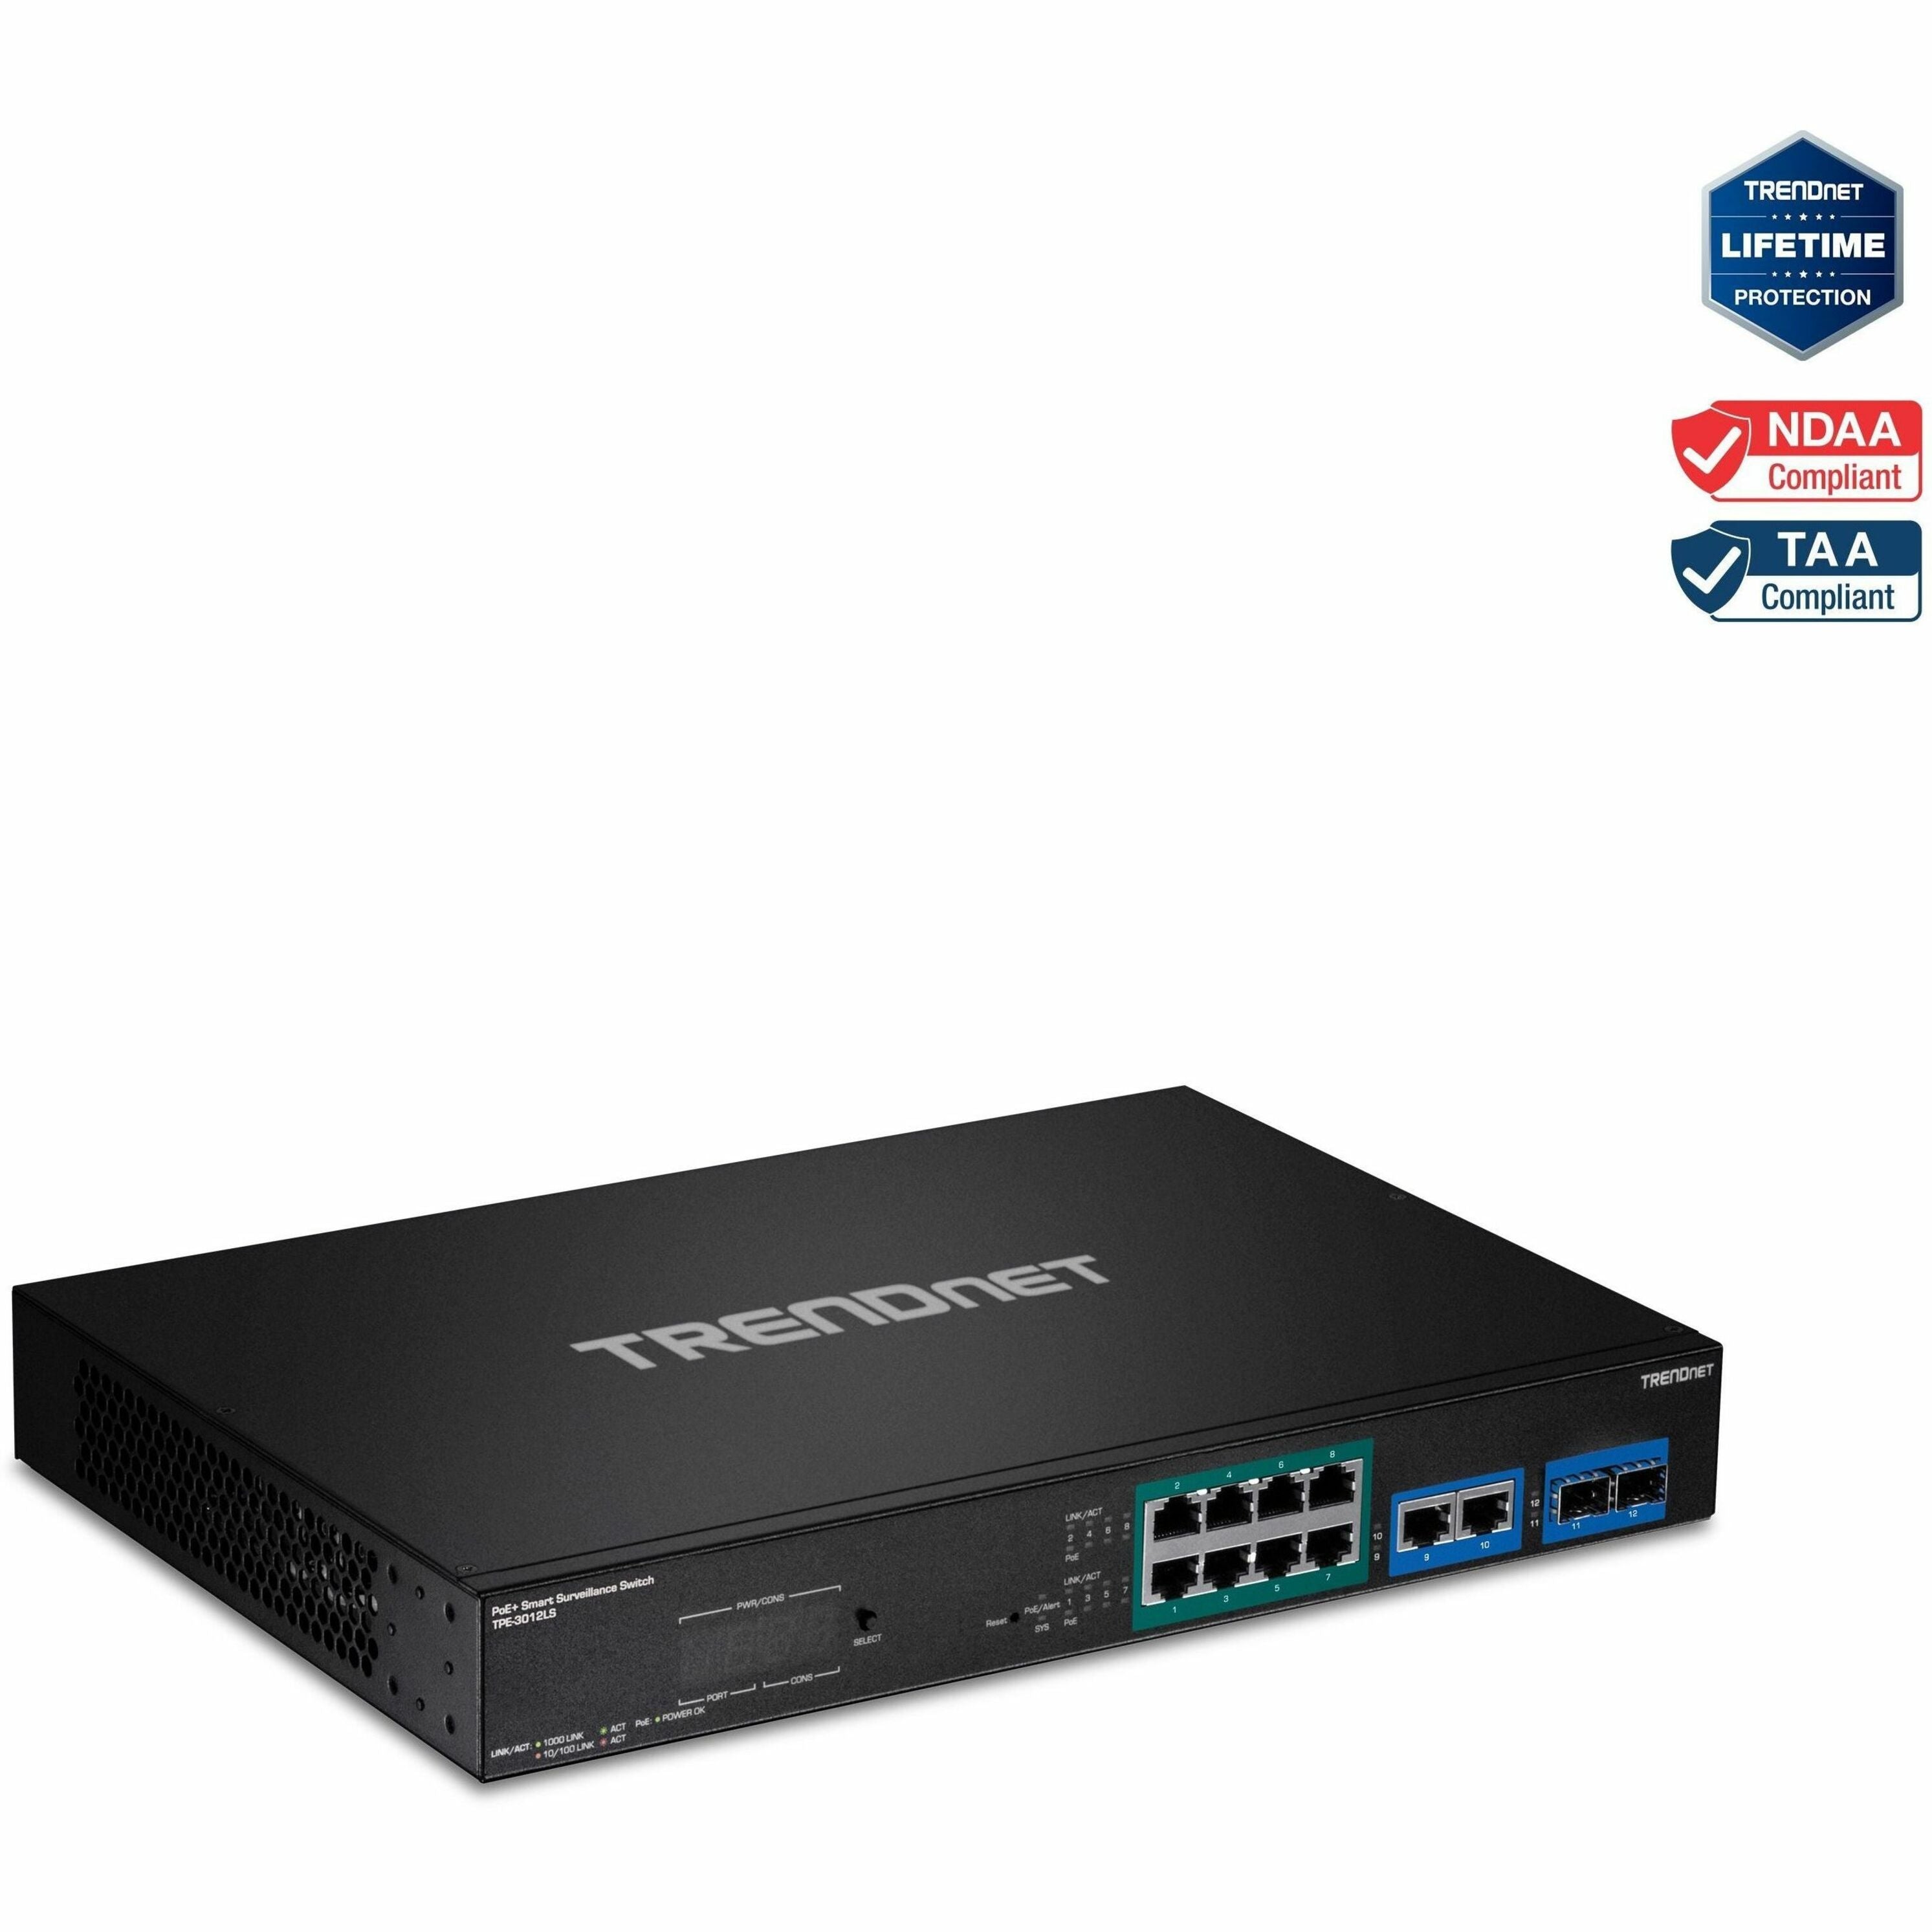 TRENDnet TPE-3012LS 12-Port Gigabit PoE+ Smart Surveillance Switch, 8 x Gigabit PoE+ Ports, 2 x Gigabit Ports, 2 x SFP Slots, 110W PoE Budget, Long Range PoE+, VLAN, QoS, LACP, ONVIF